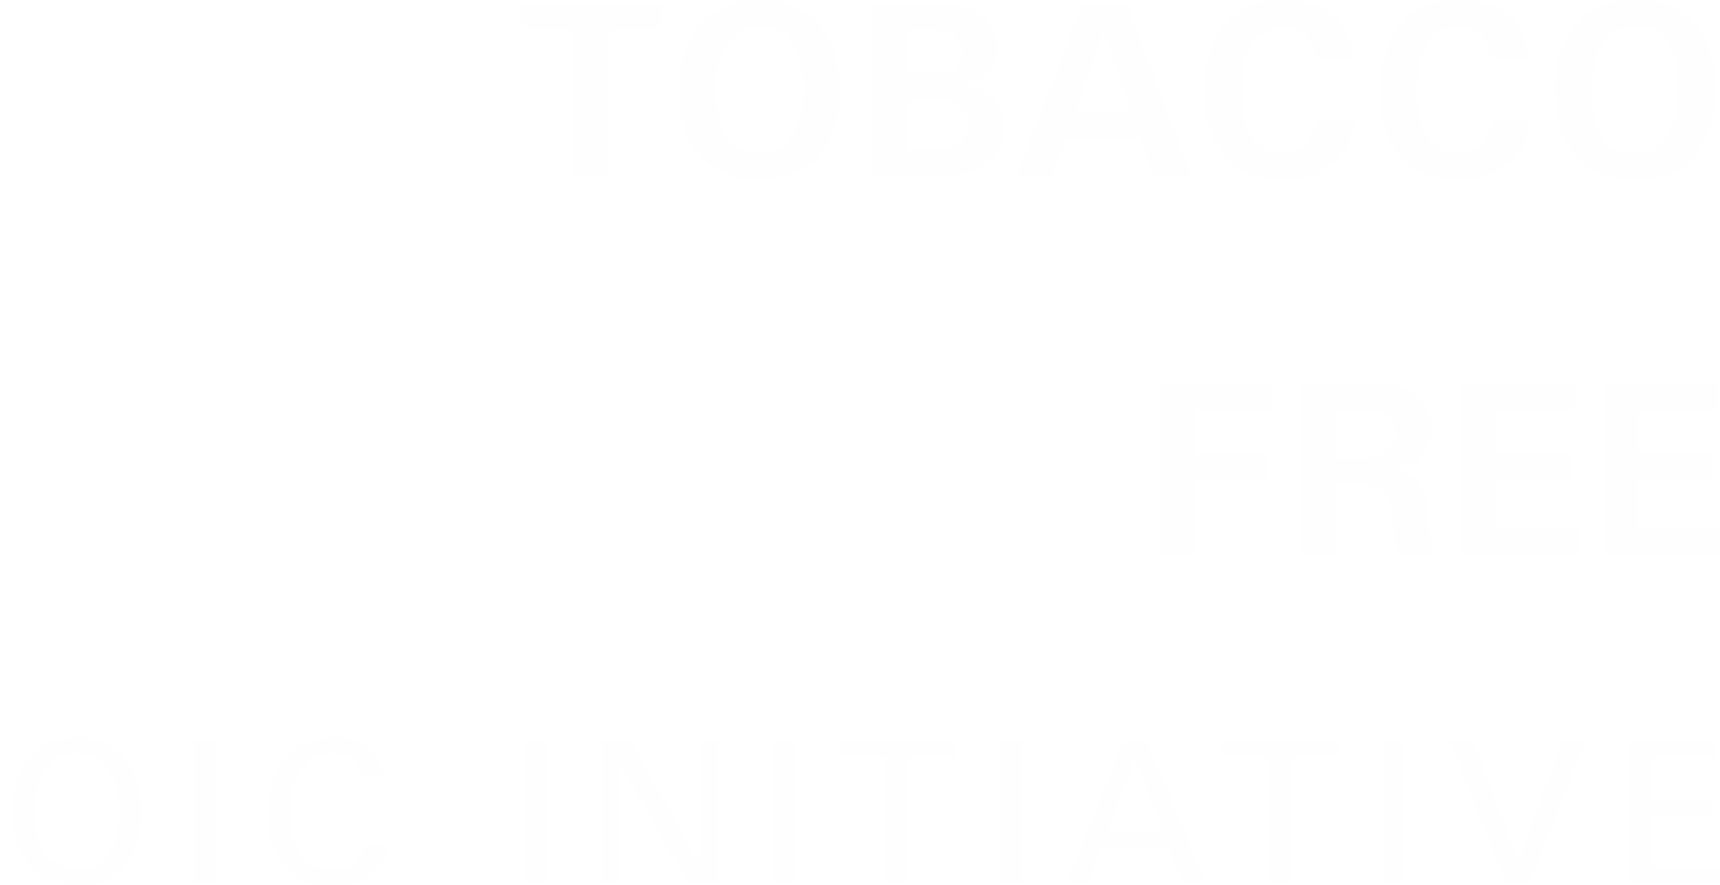 OIC Tobacco Portal